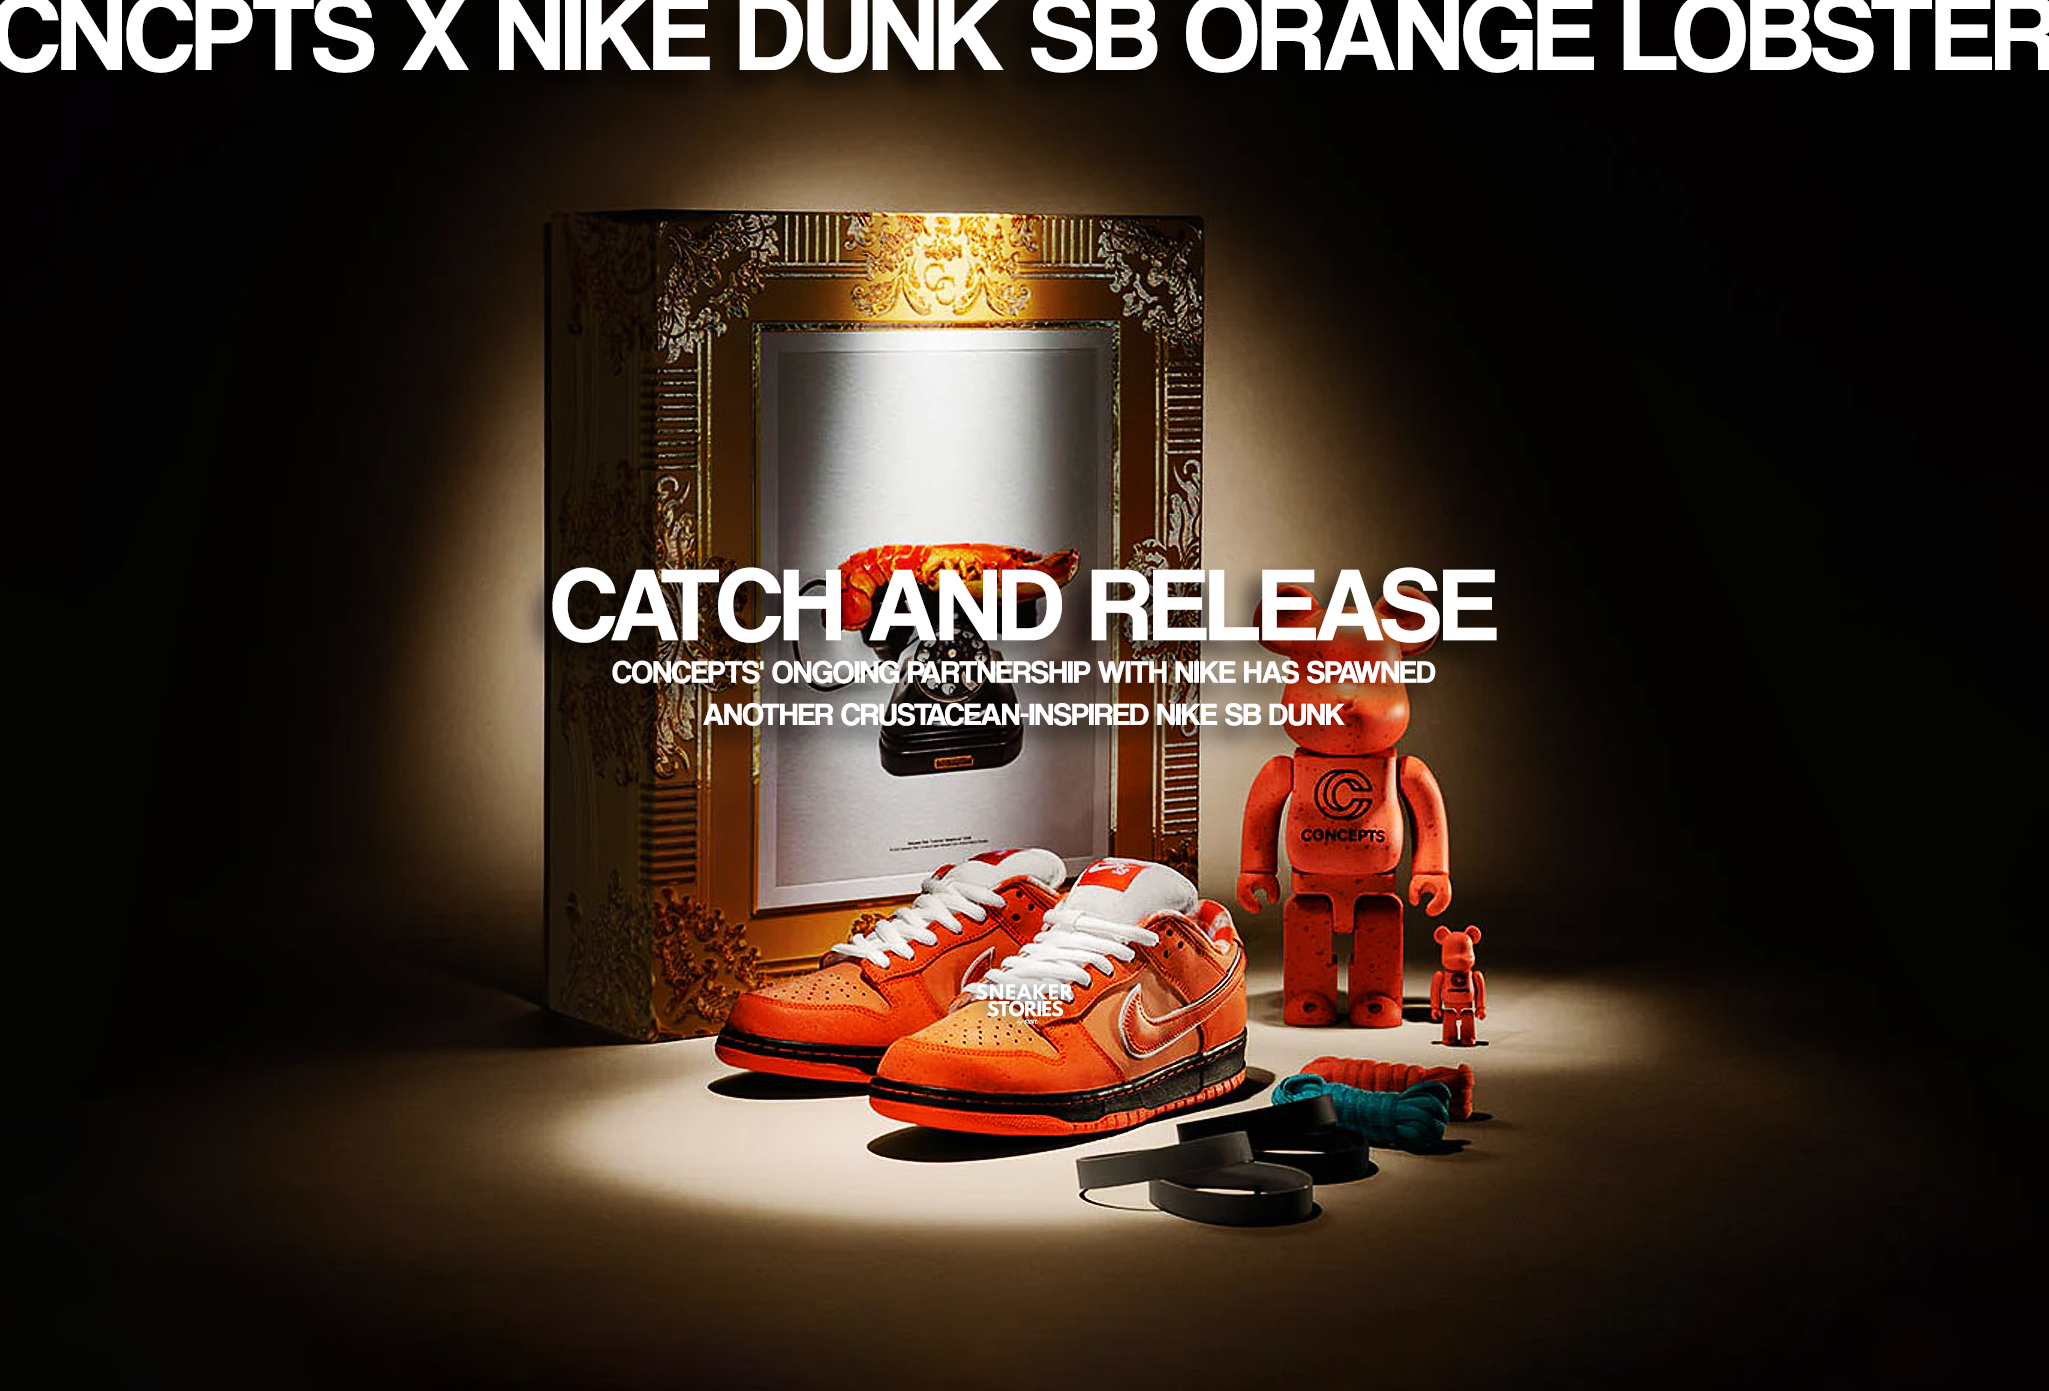 81 Nike Dunks ideas  nike dunks, nike, dunk